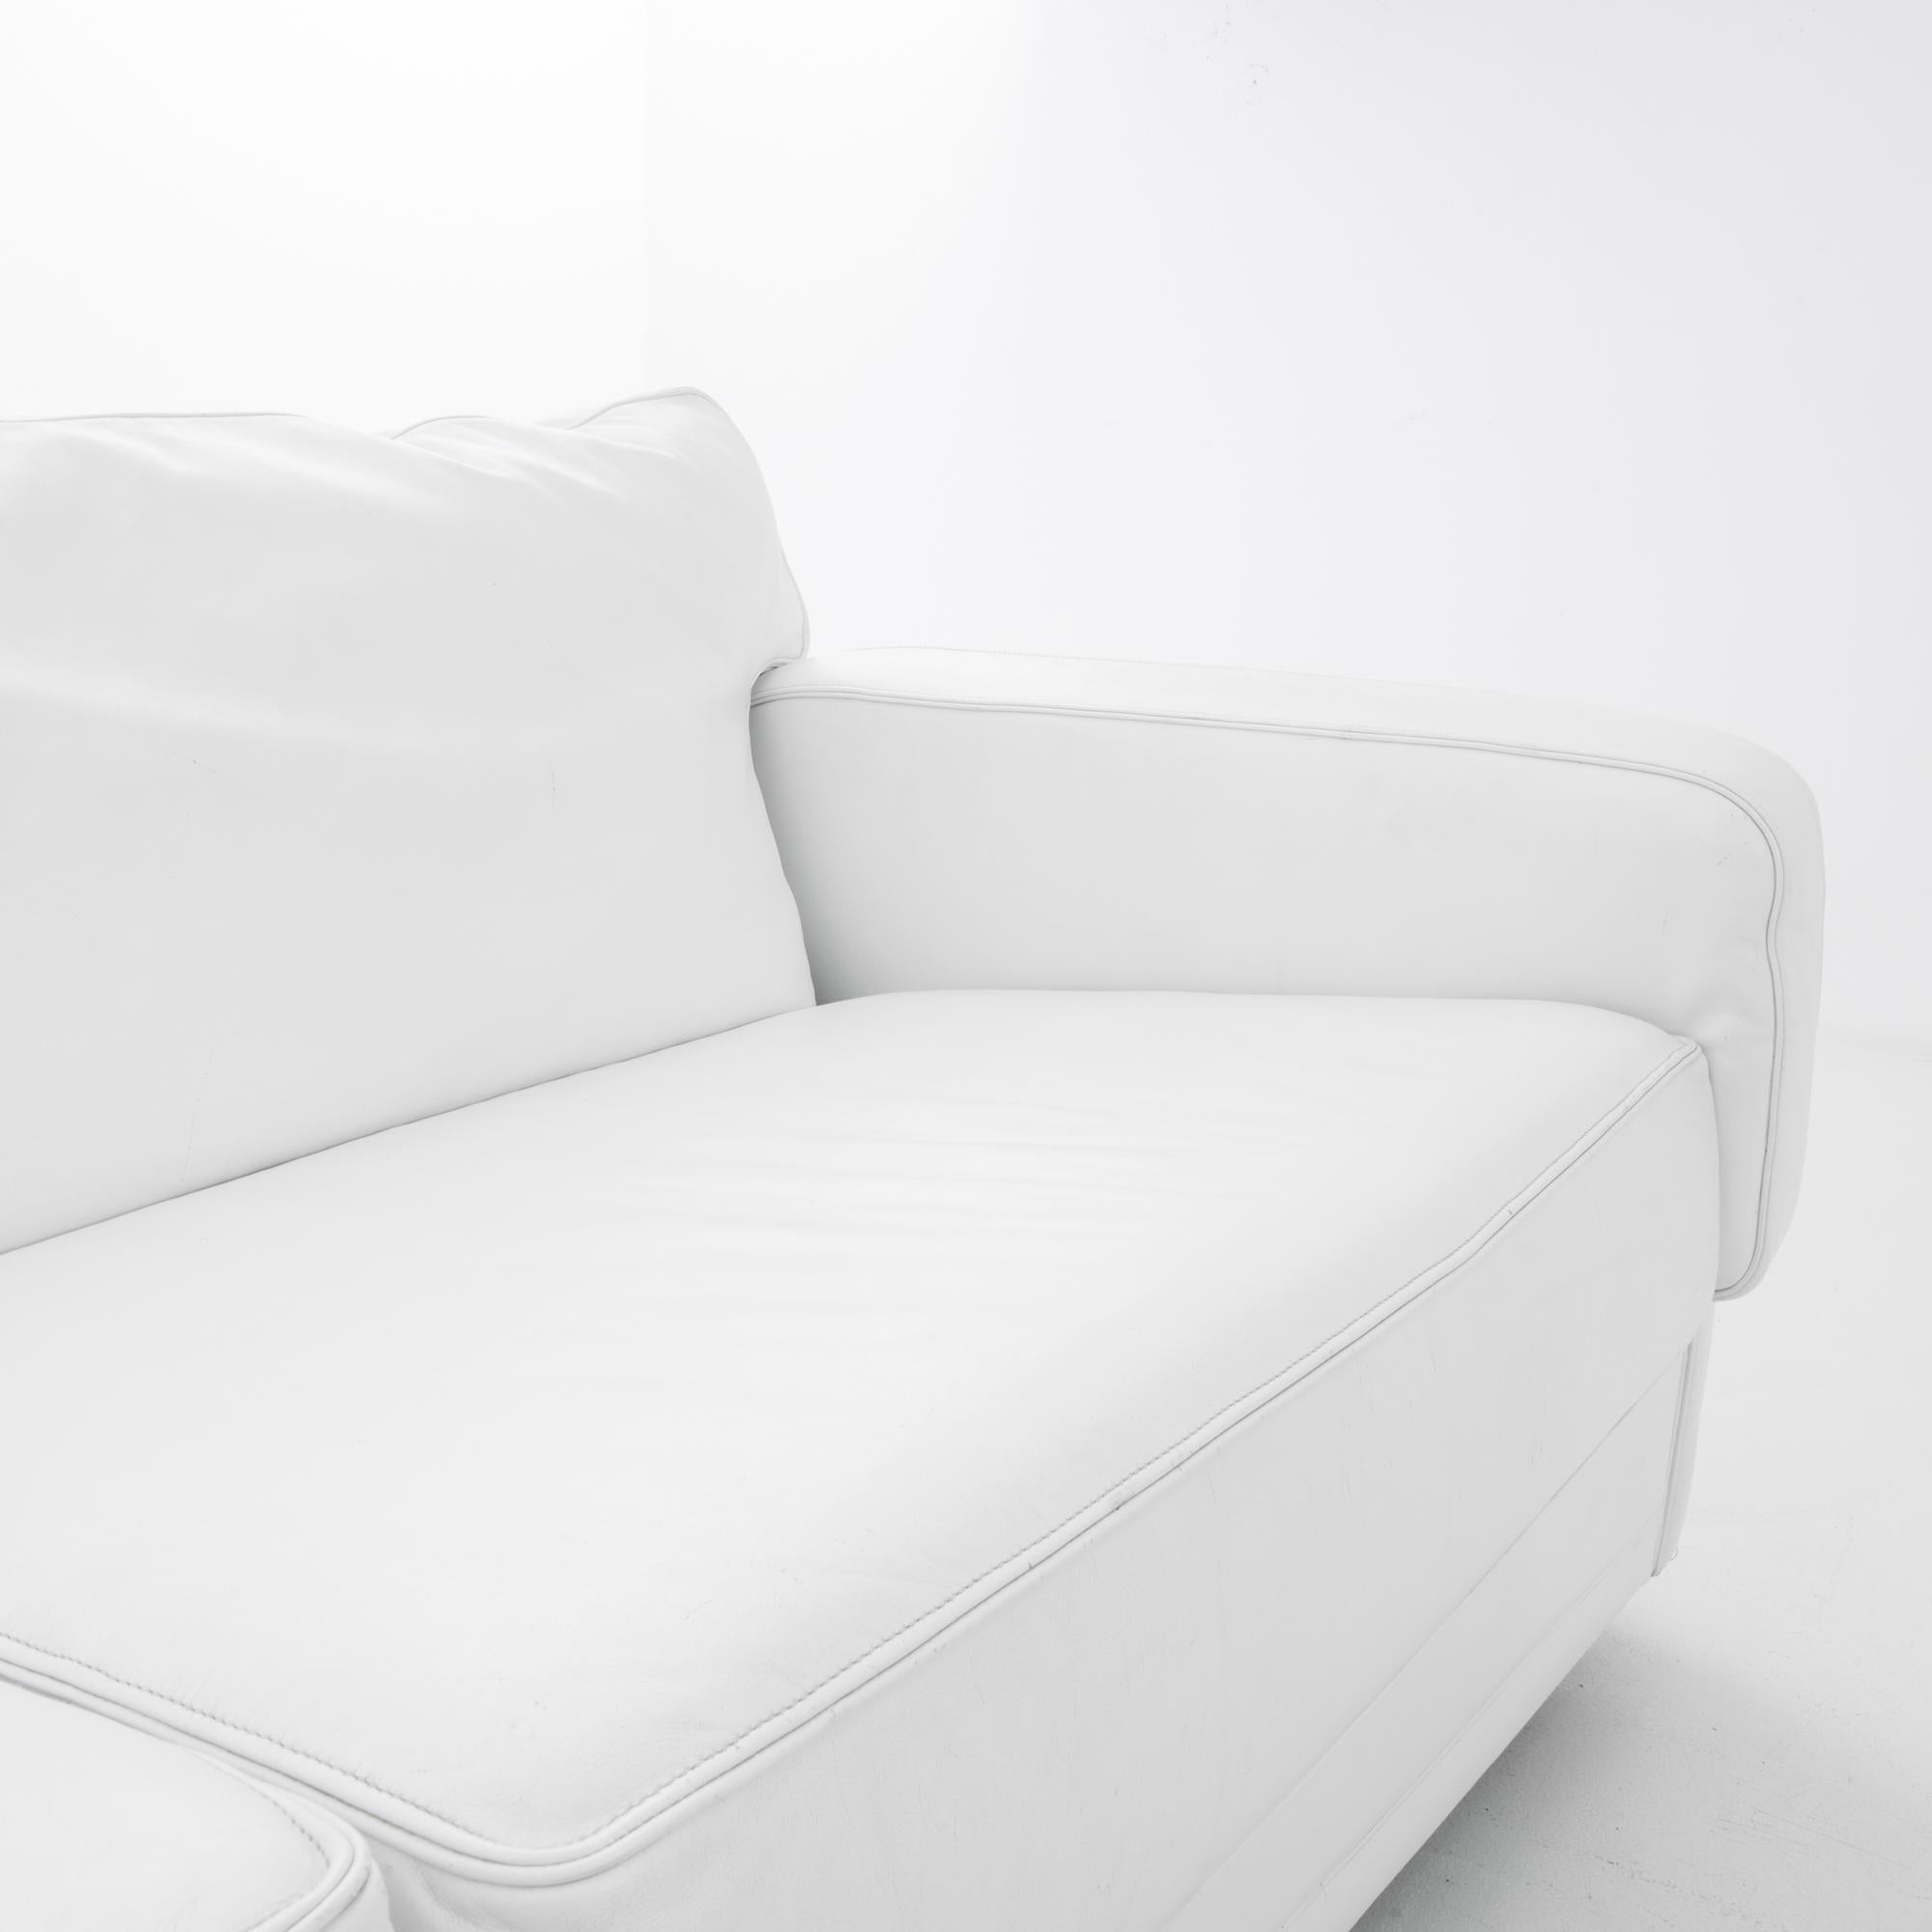 1980s Poltrona Frau White Leather Sofa  For Sale 2